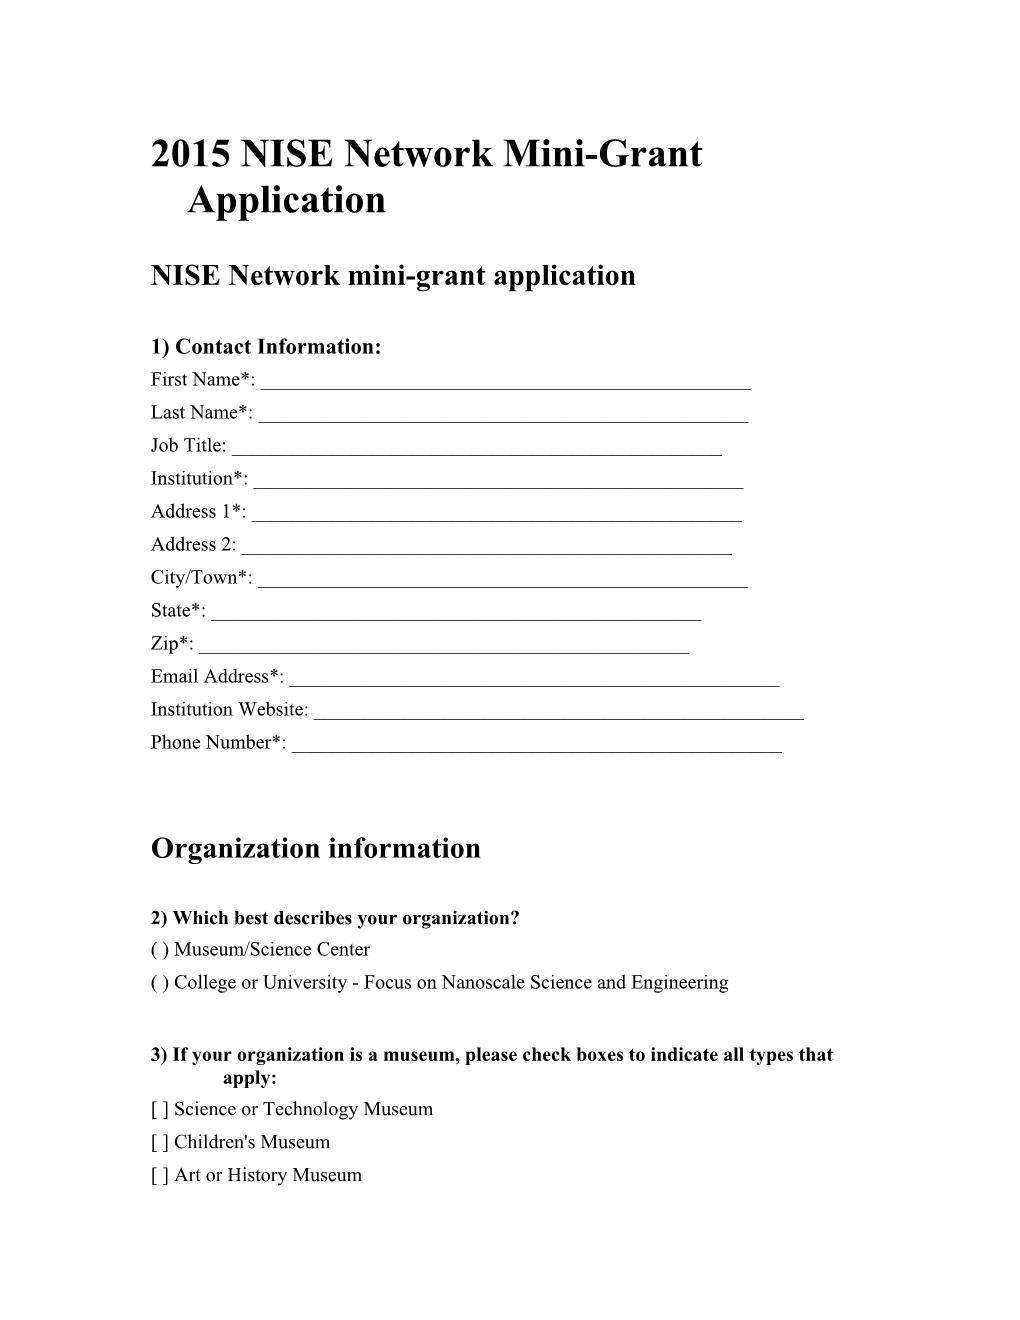 2015 NISE Network Mini-Grant Application